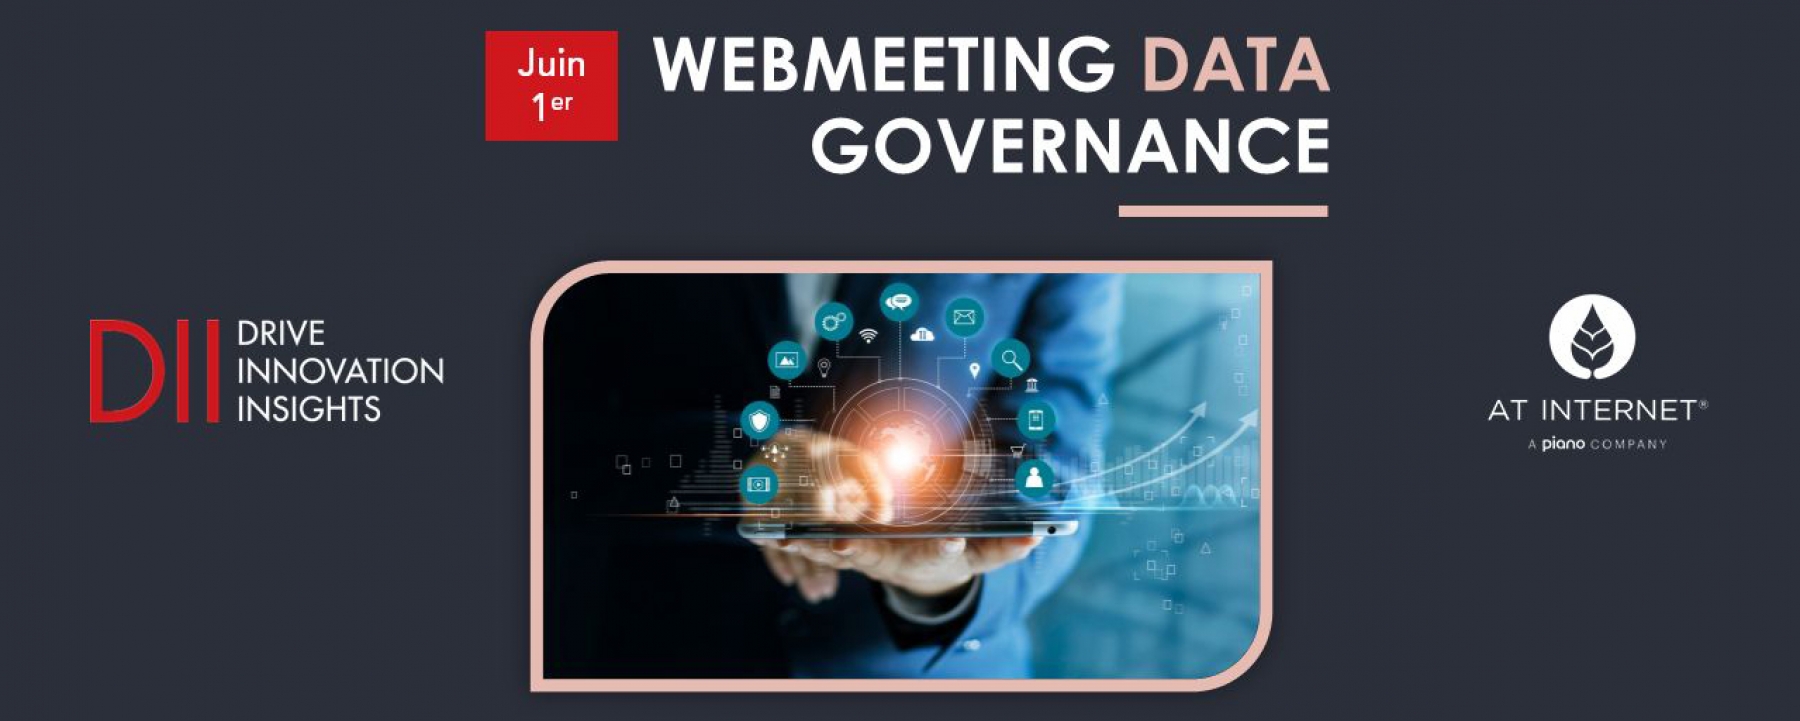 Webmeeting Data Governance, par DII le 1er juin